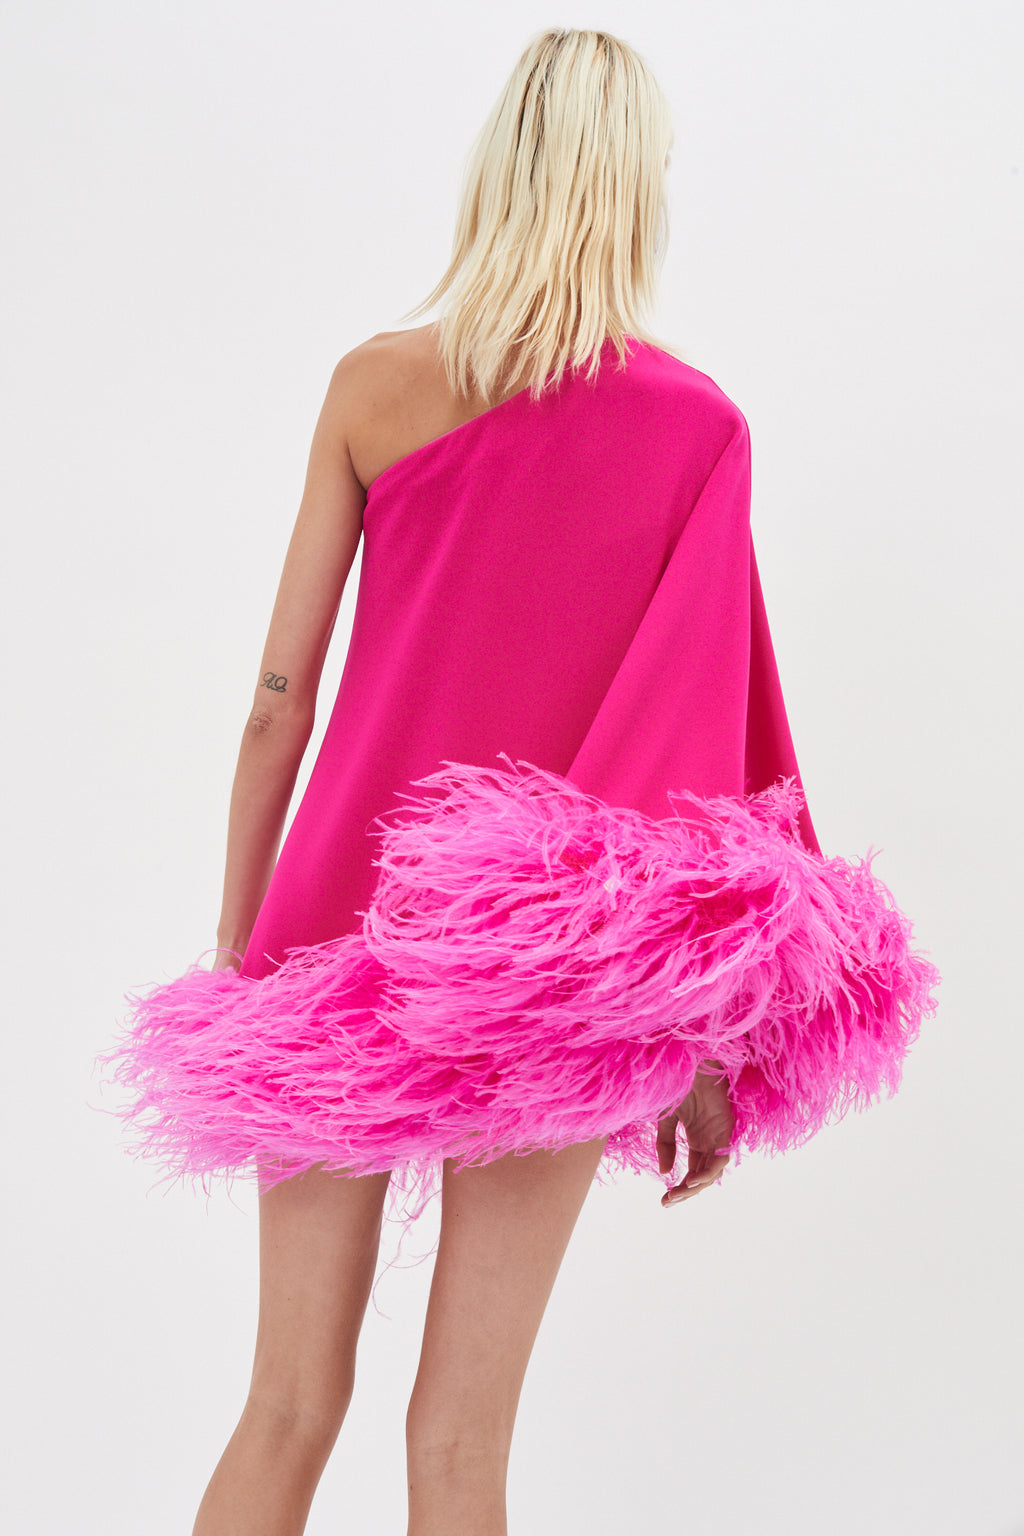 Marlene Hot Pink Dress